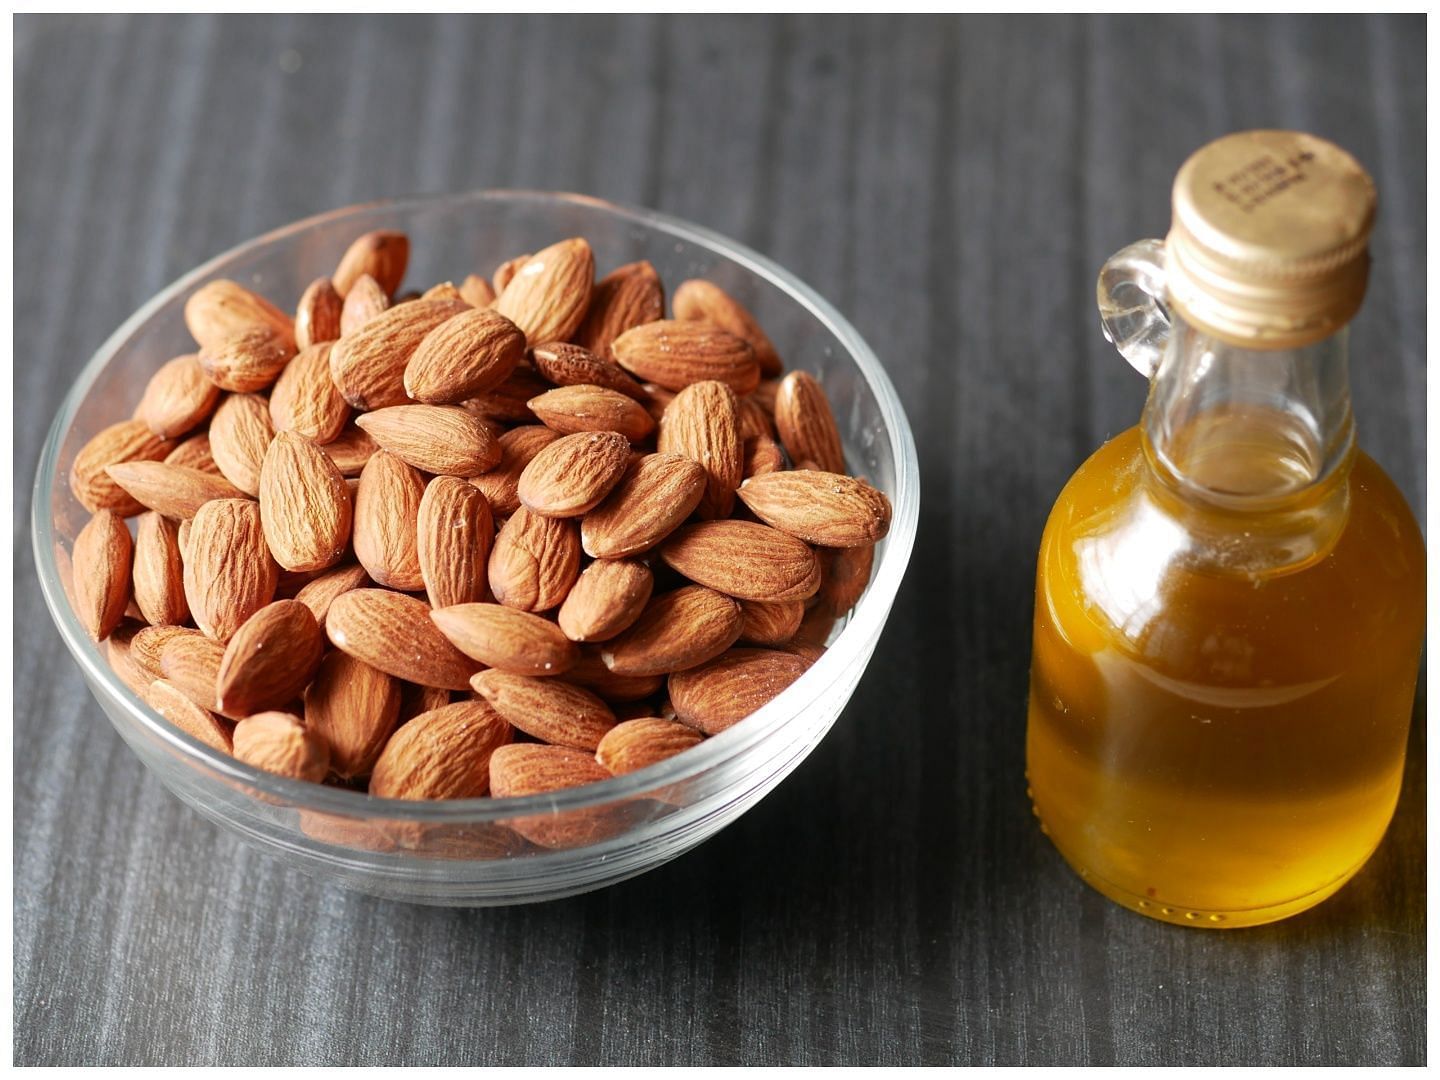 Almond supplies vitamins to your skin (Image via Vecteezy)